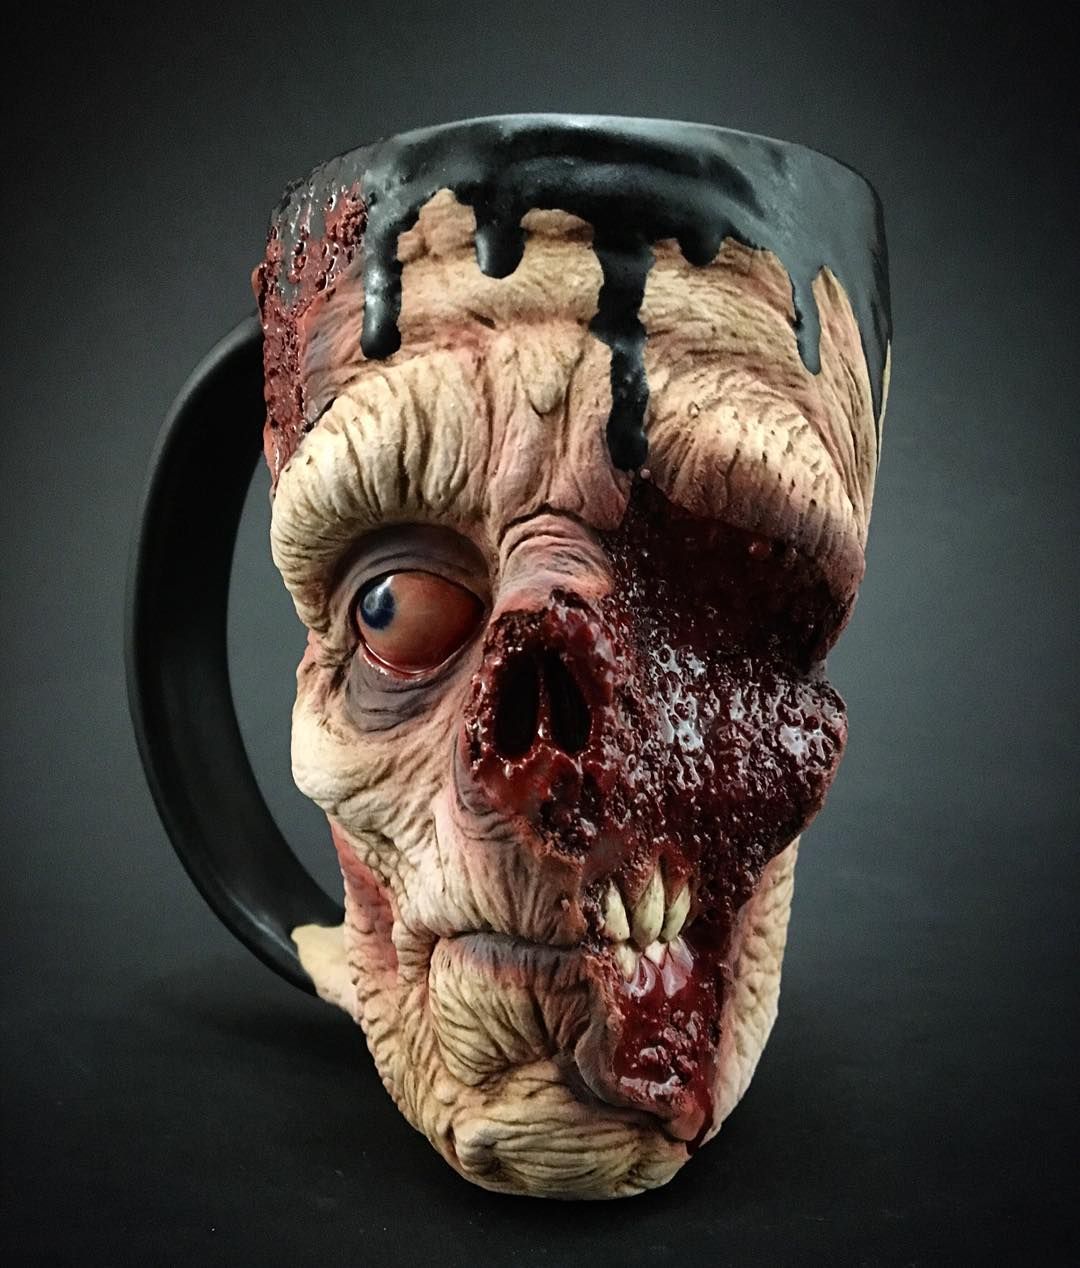 horror-zombie-mug-pottery-mabagal-joe-kevin-turkey-merck-2